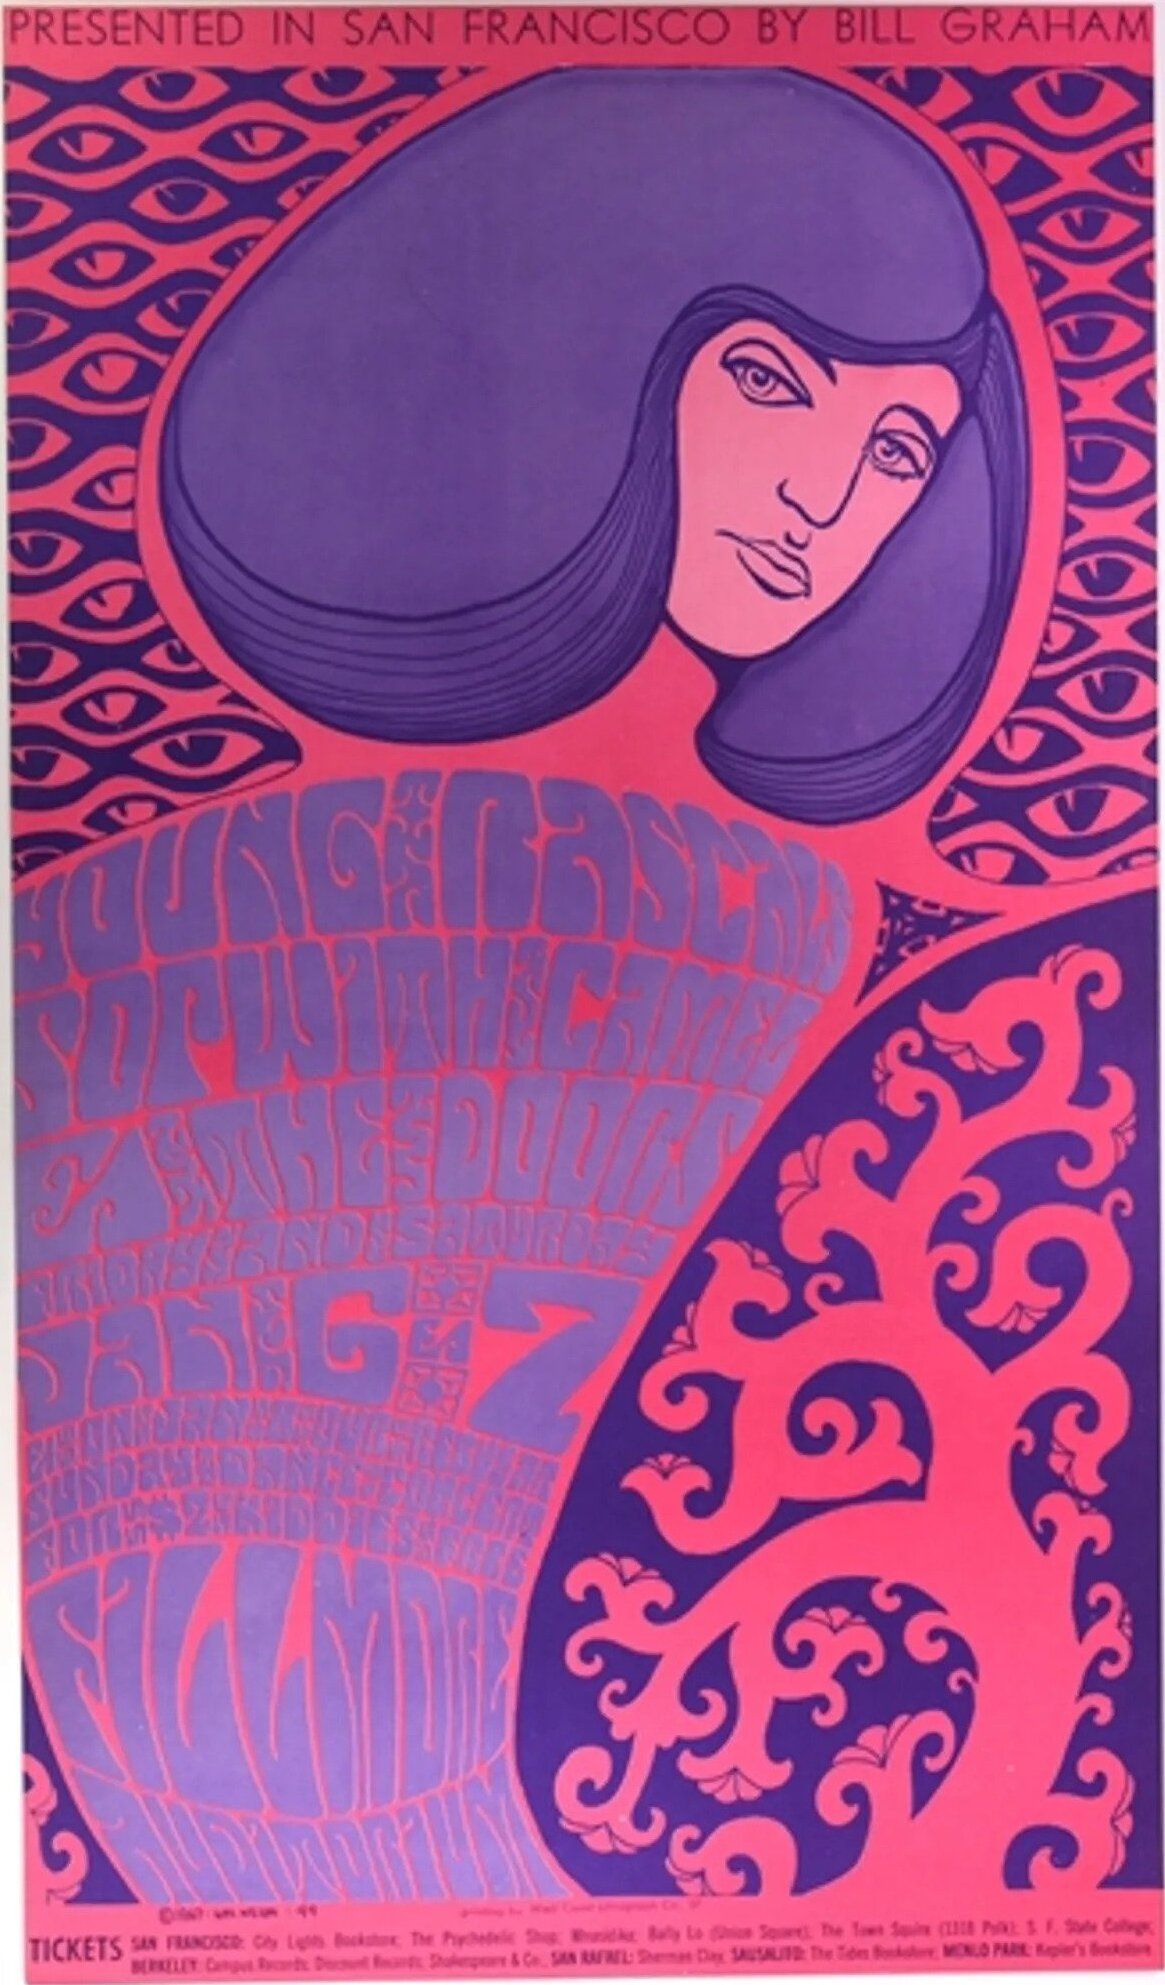 BG-44-OP-1 The Doors & Young Rascals The Fillmore 1967 Concert Poster